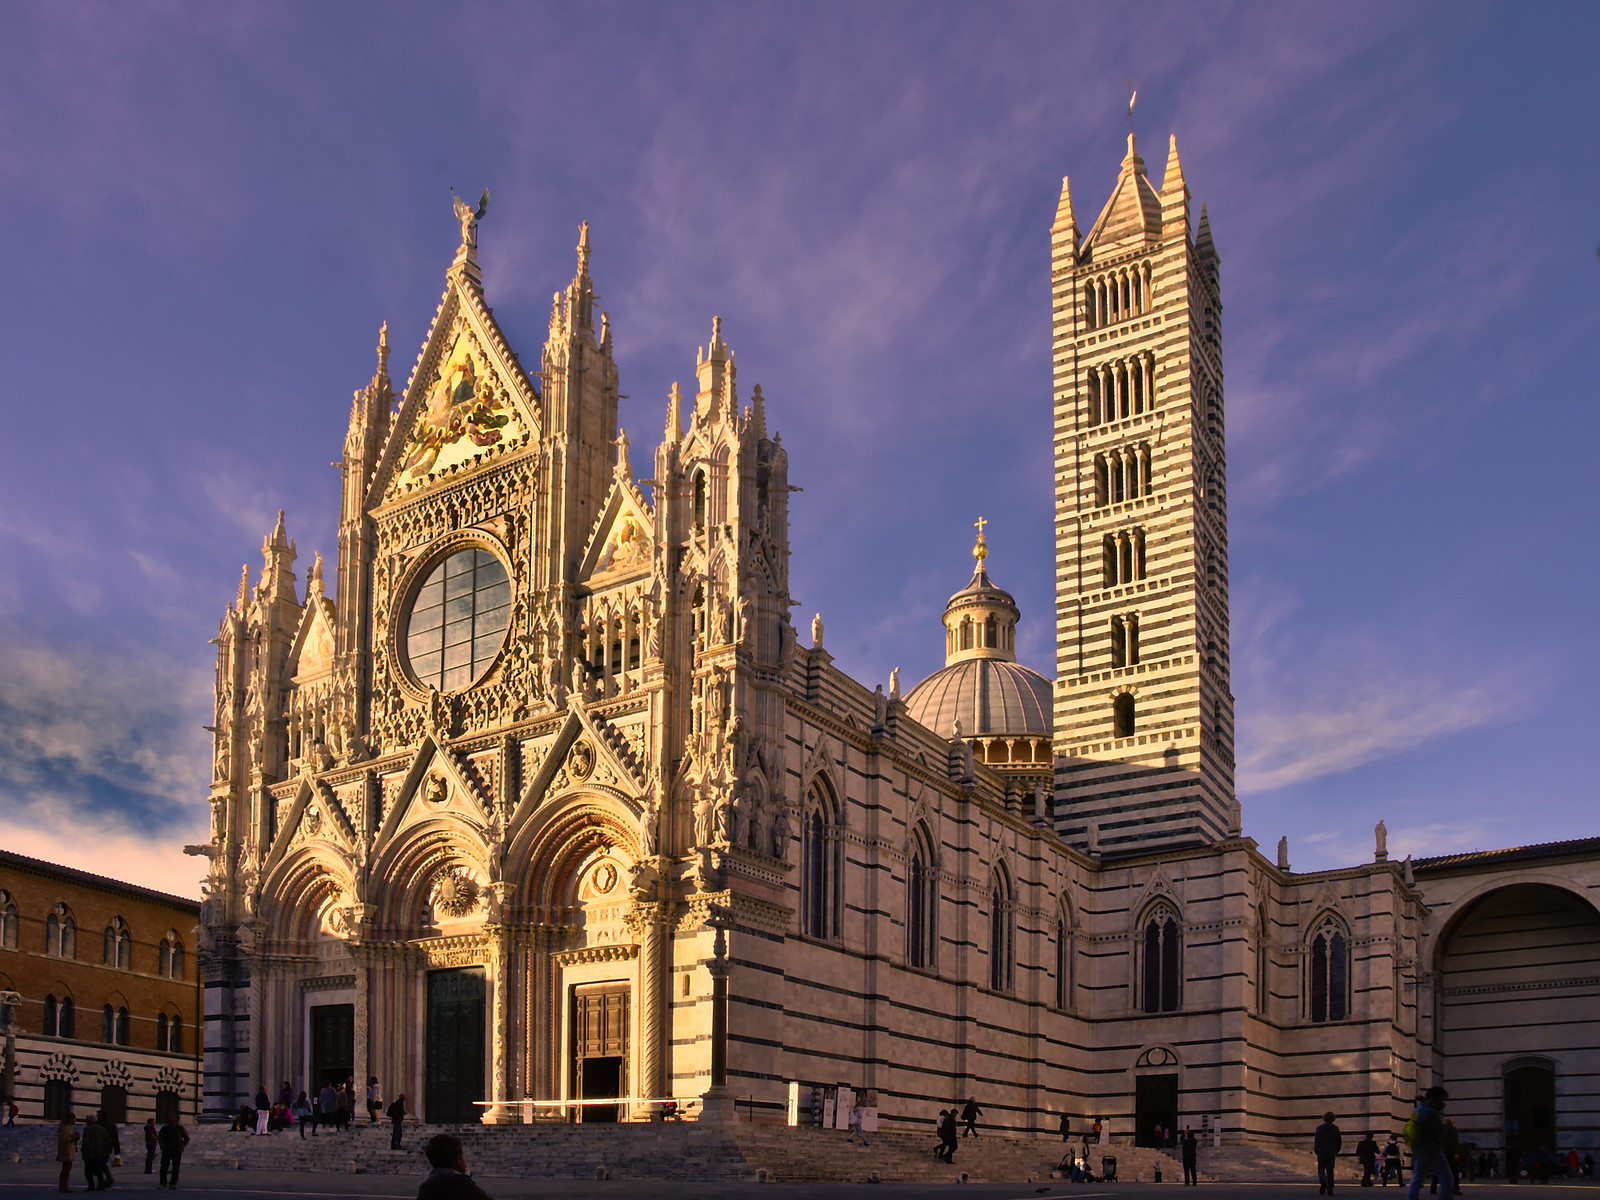 Siena - Ideal Destination For Art Lovers